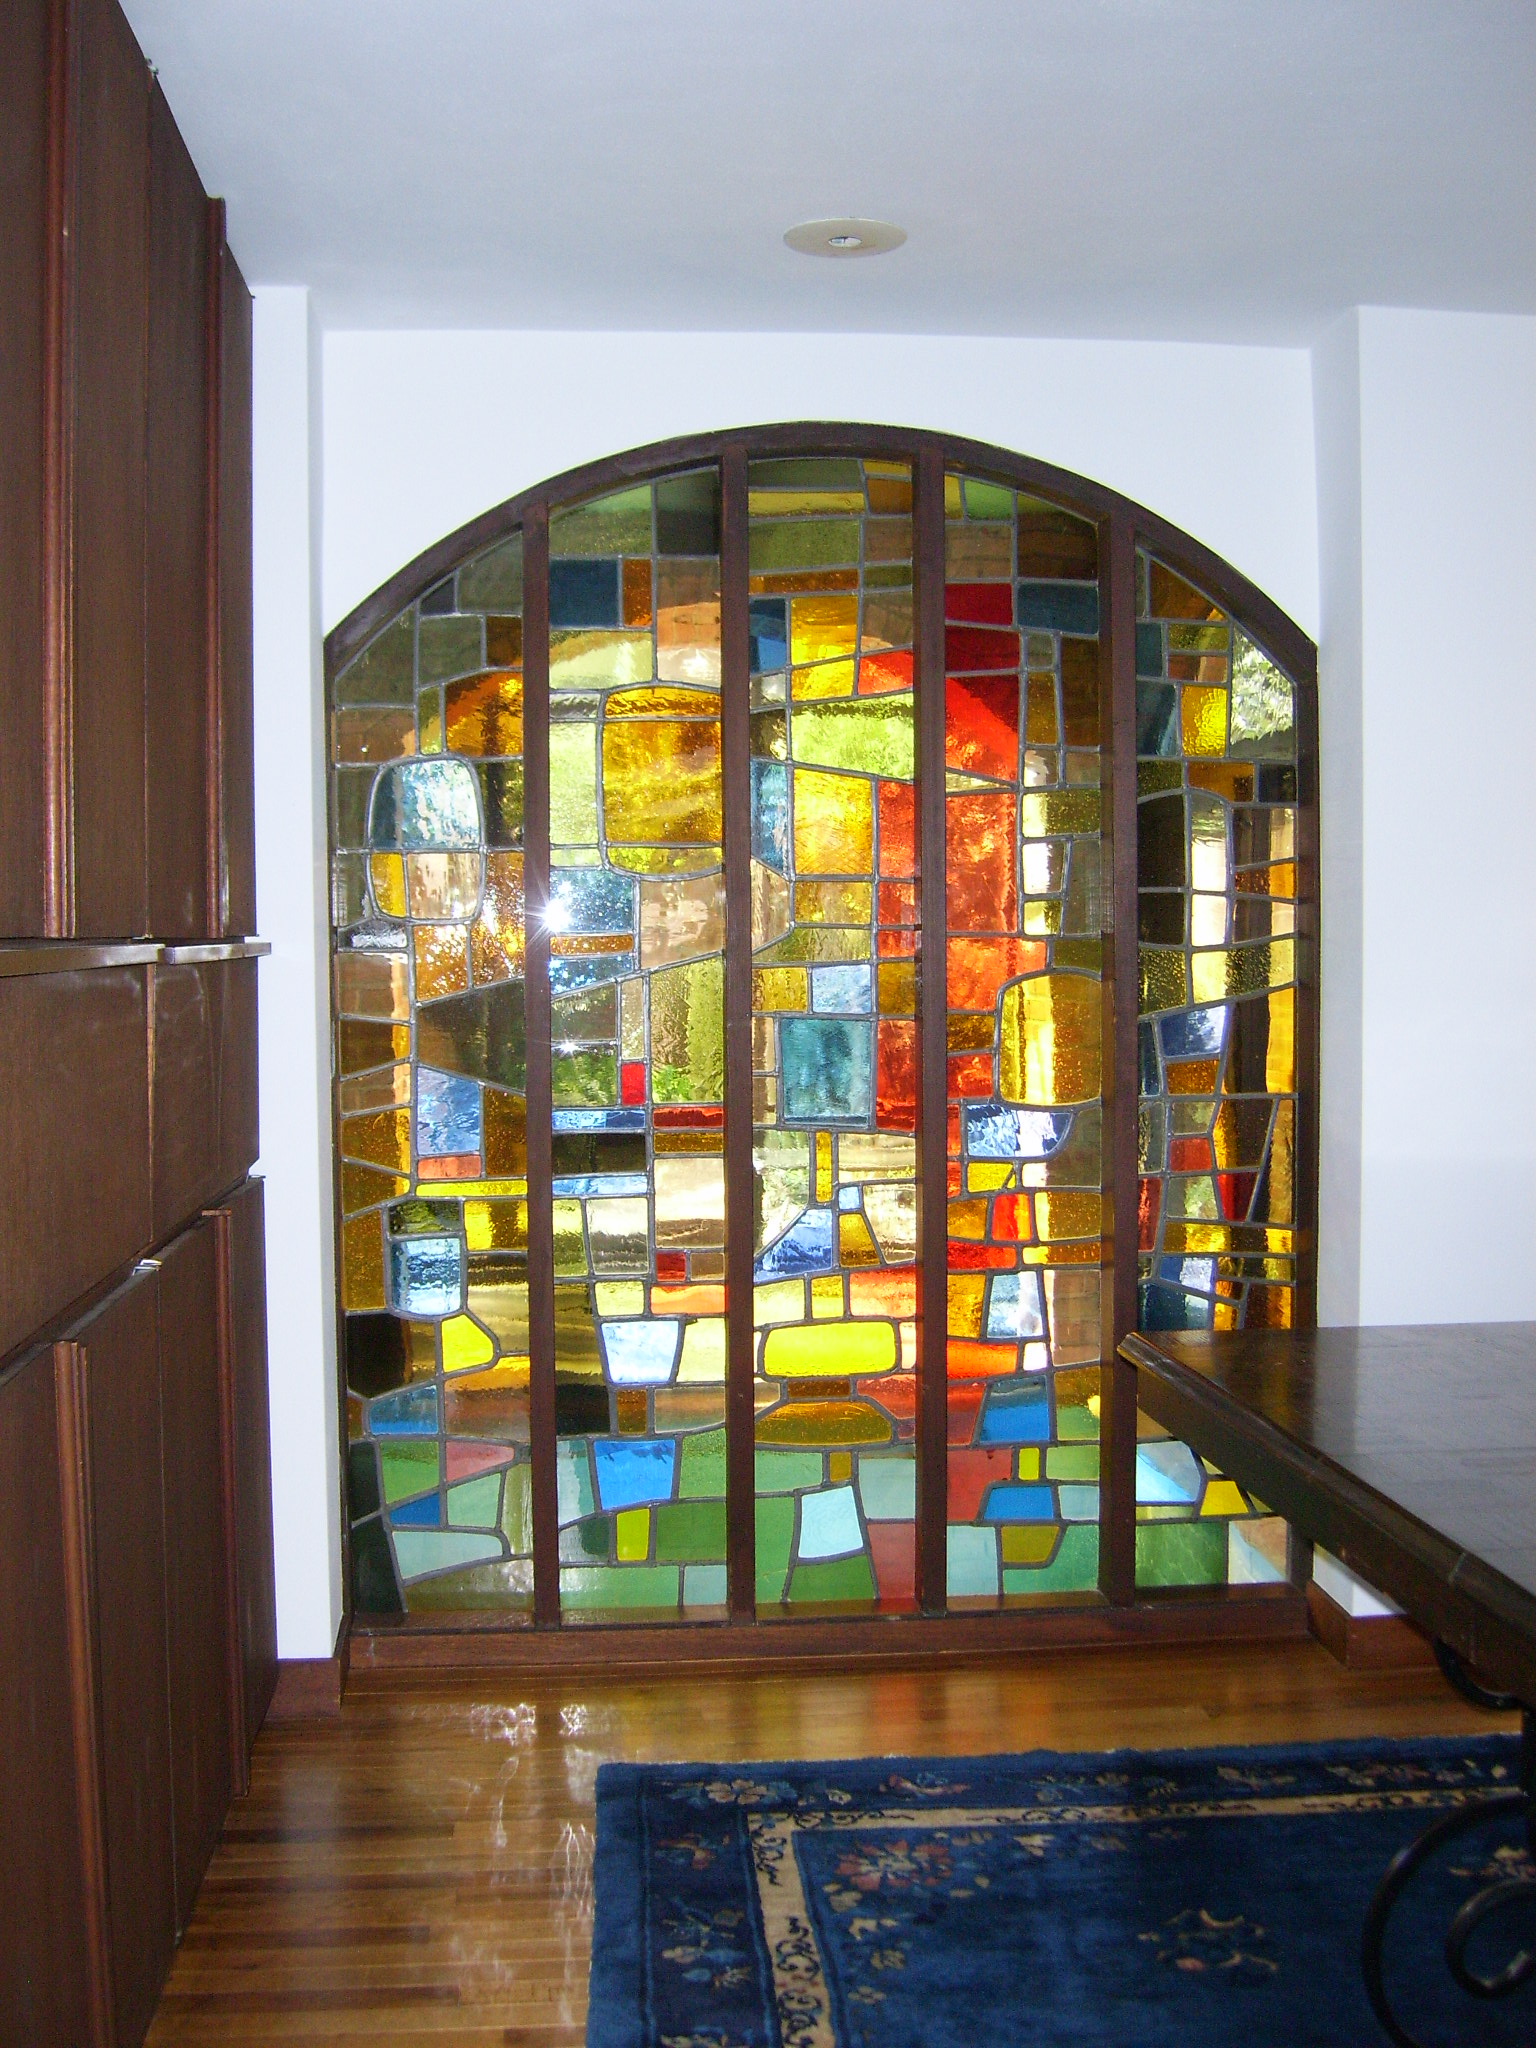 <p>116-118 Delancey Street - Stained glass interior window</p>
